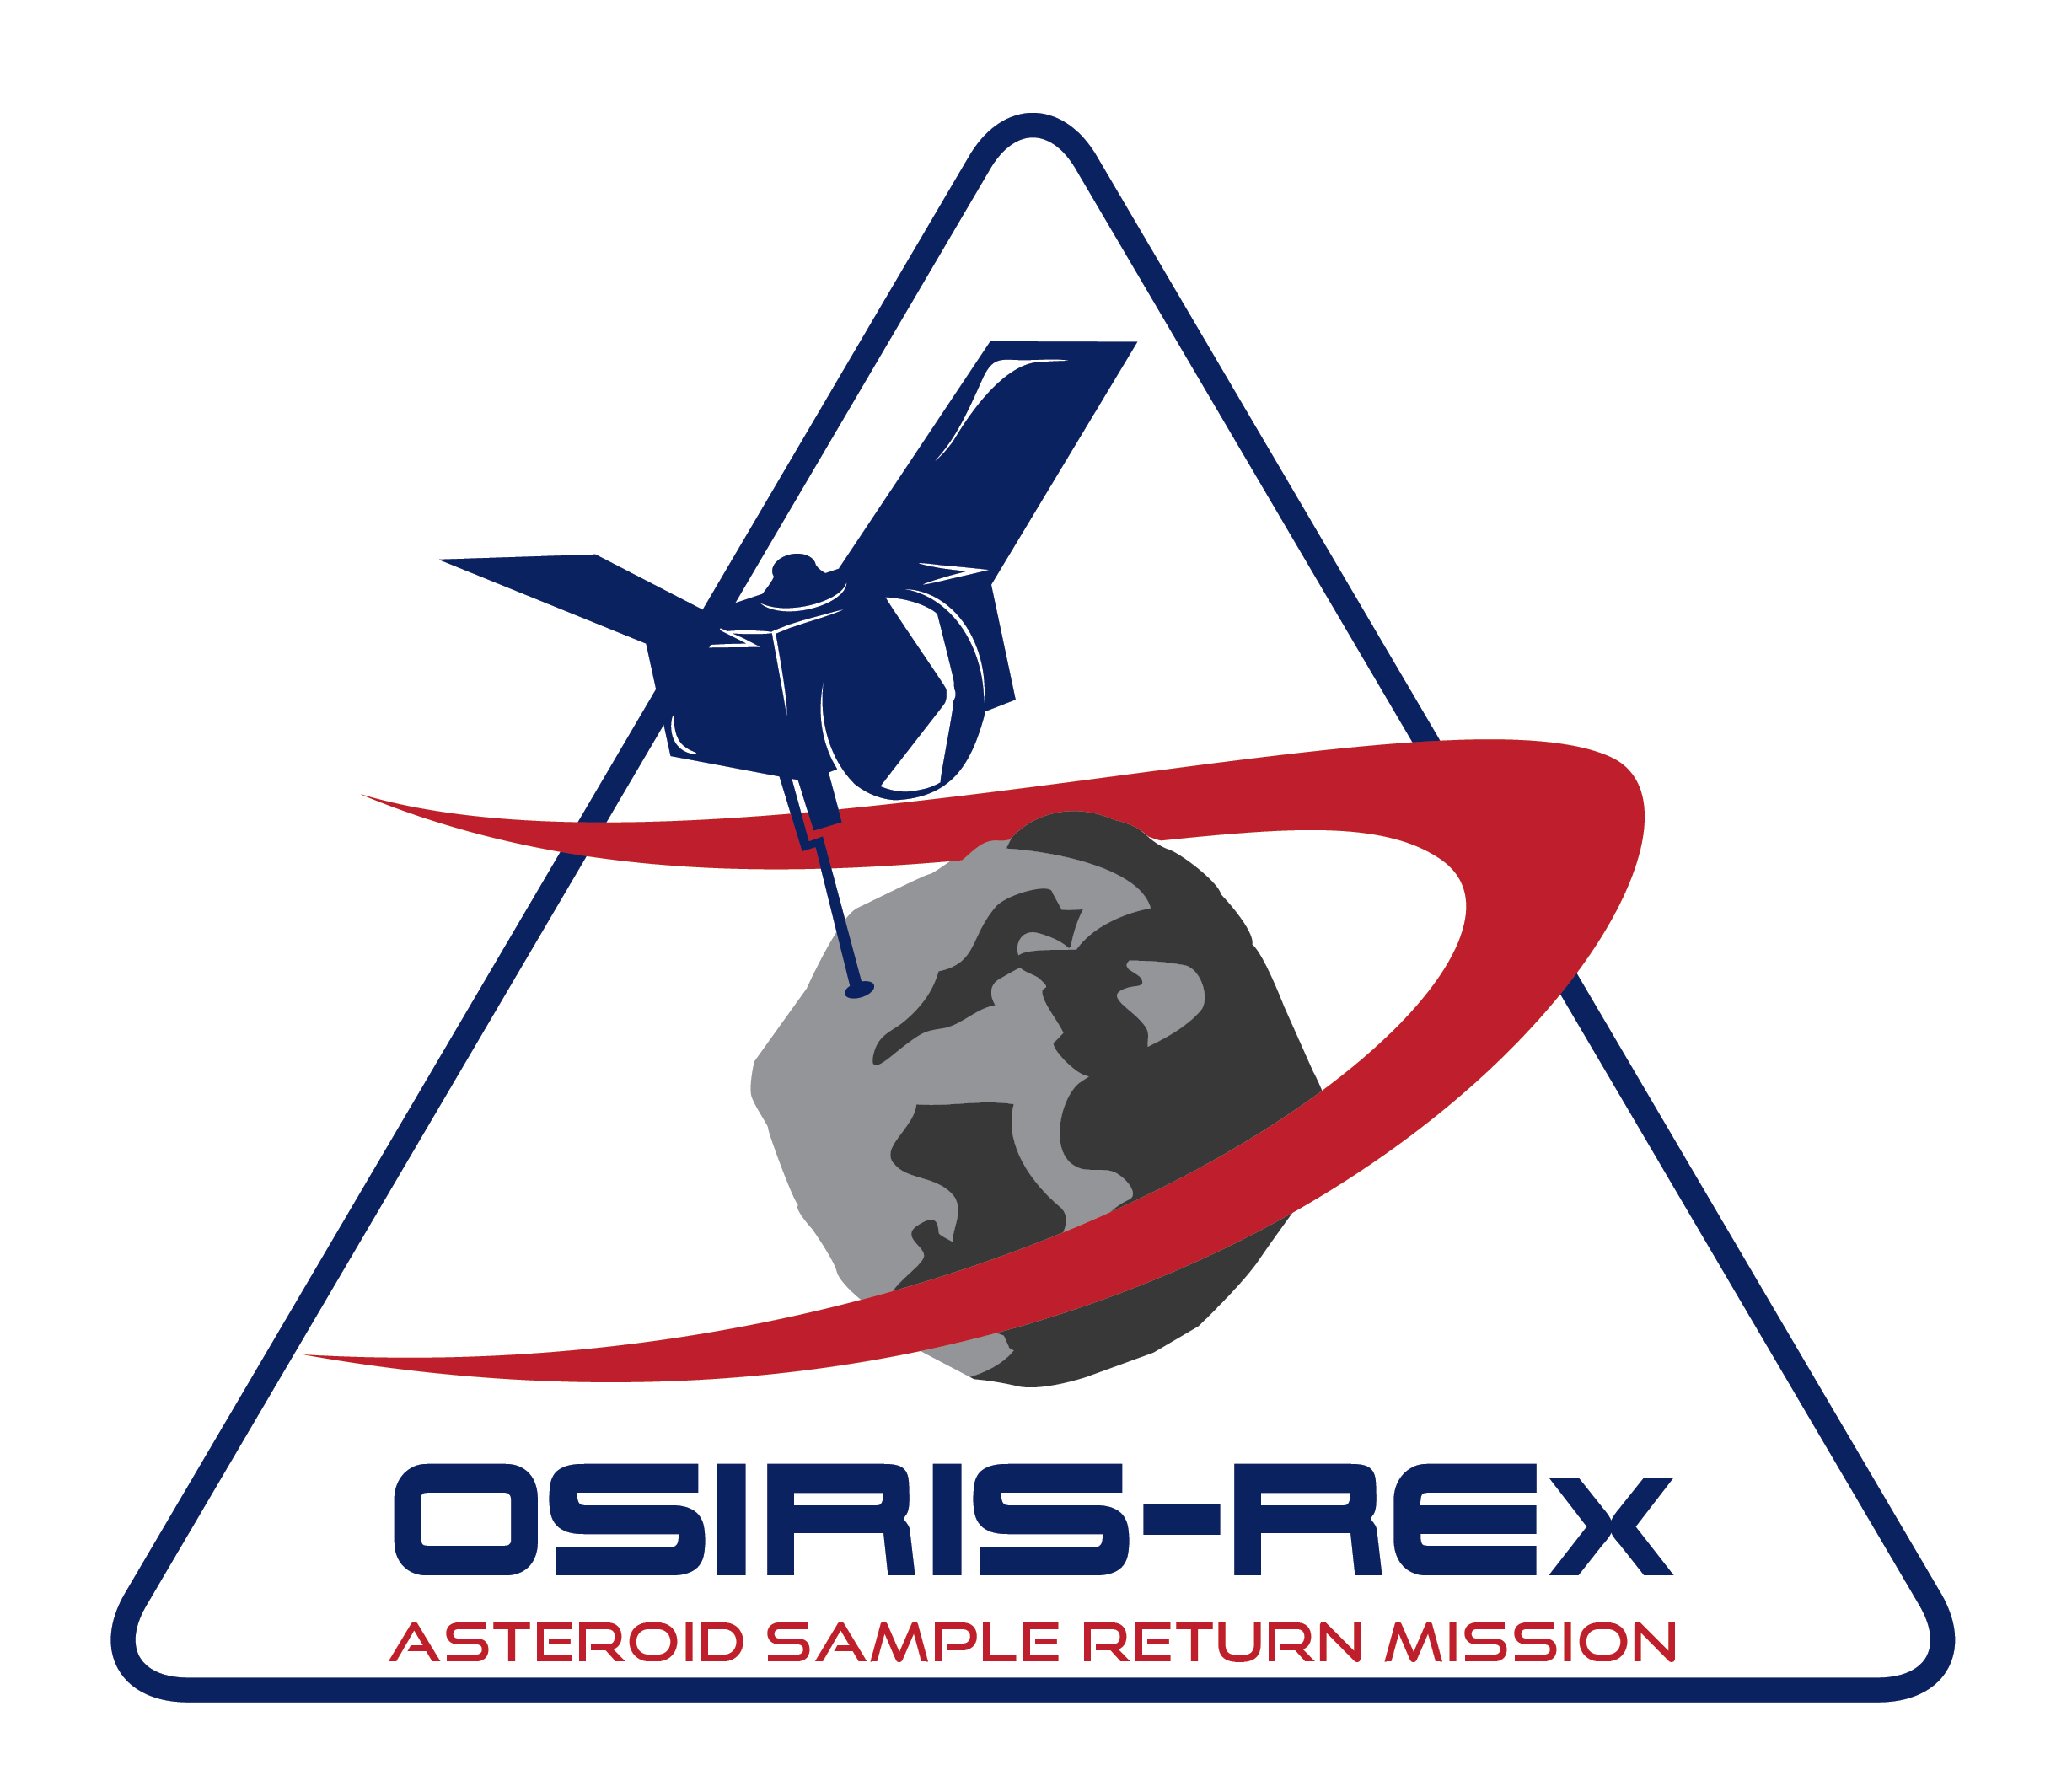 OSIRIS REx mission logo circa 2015